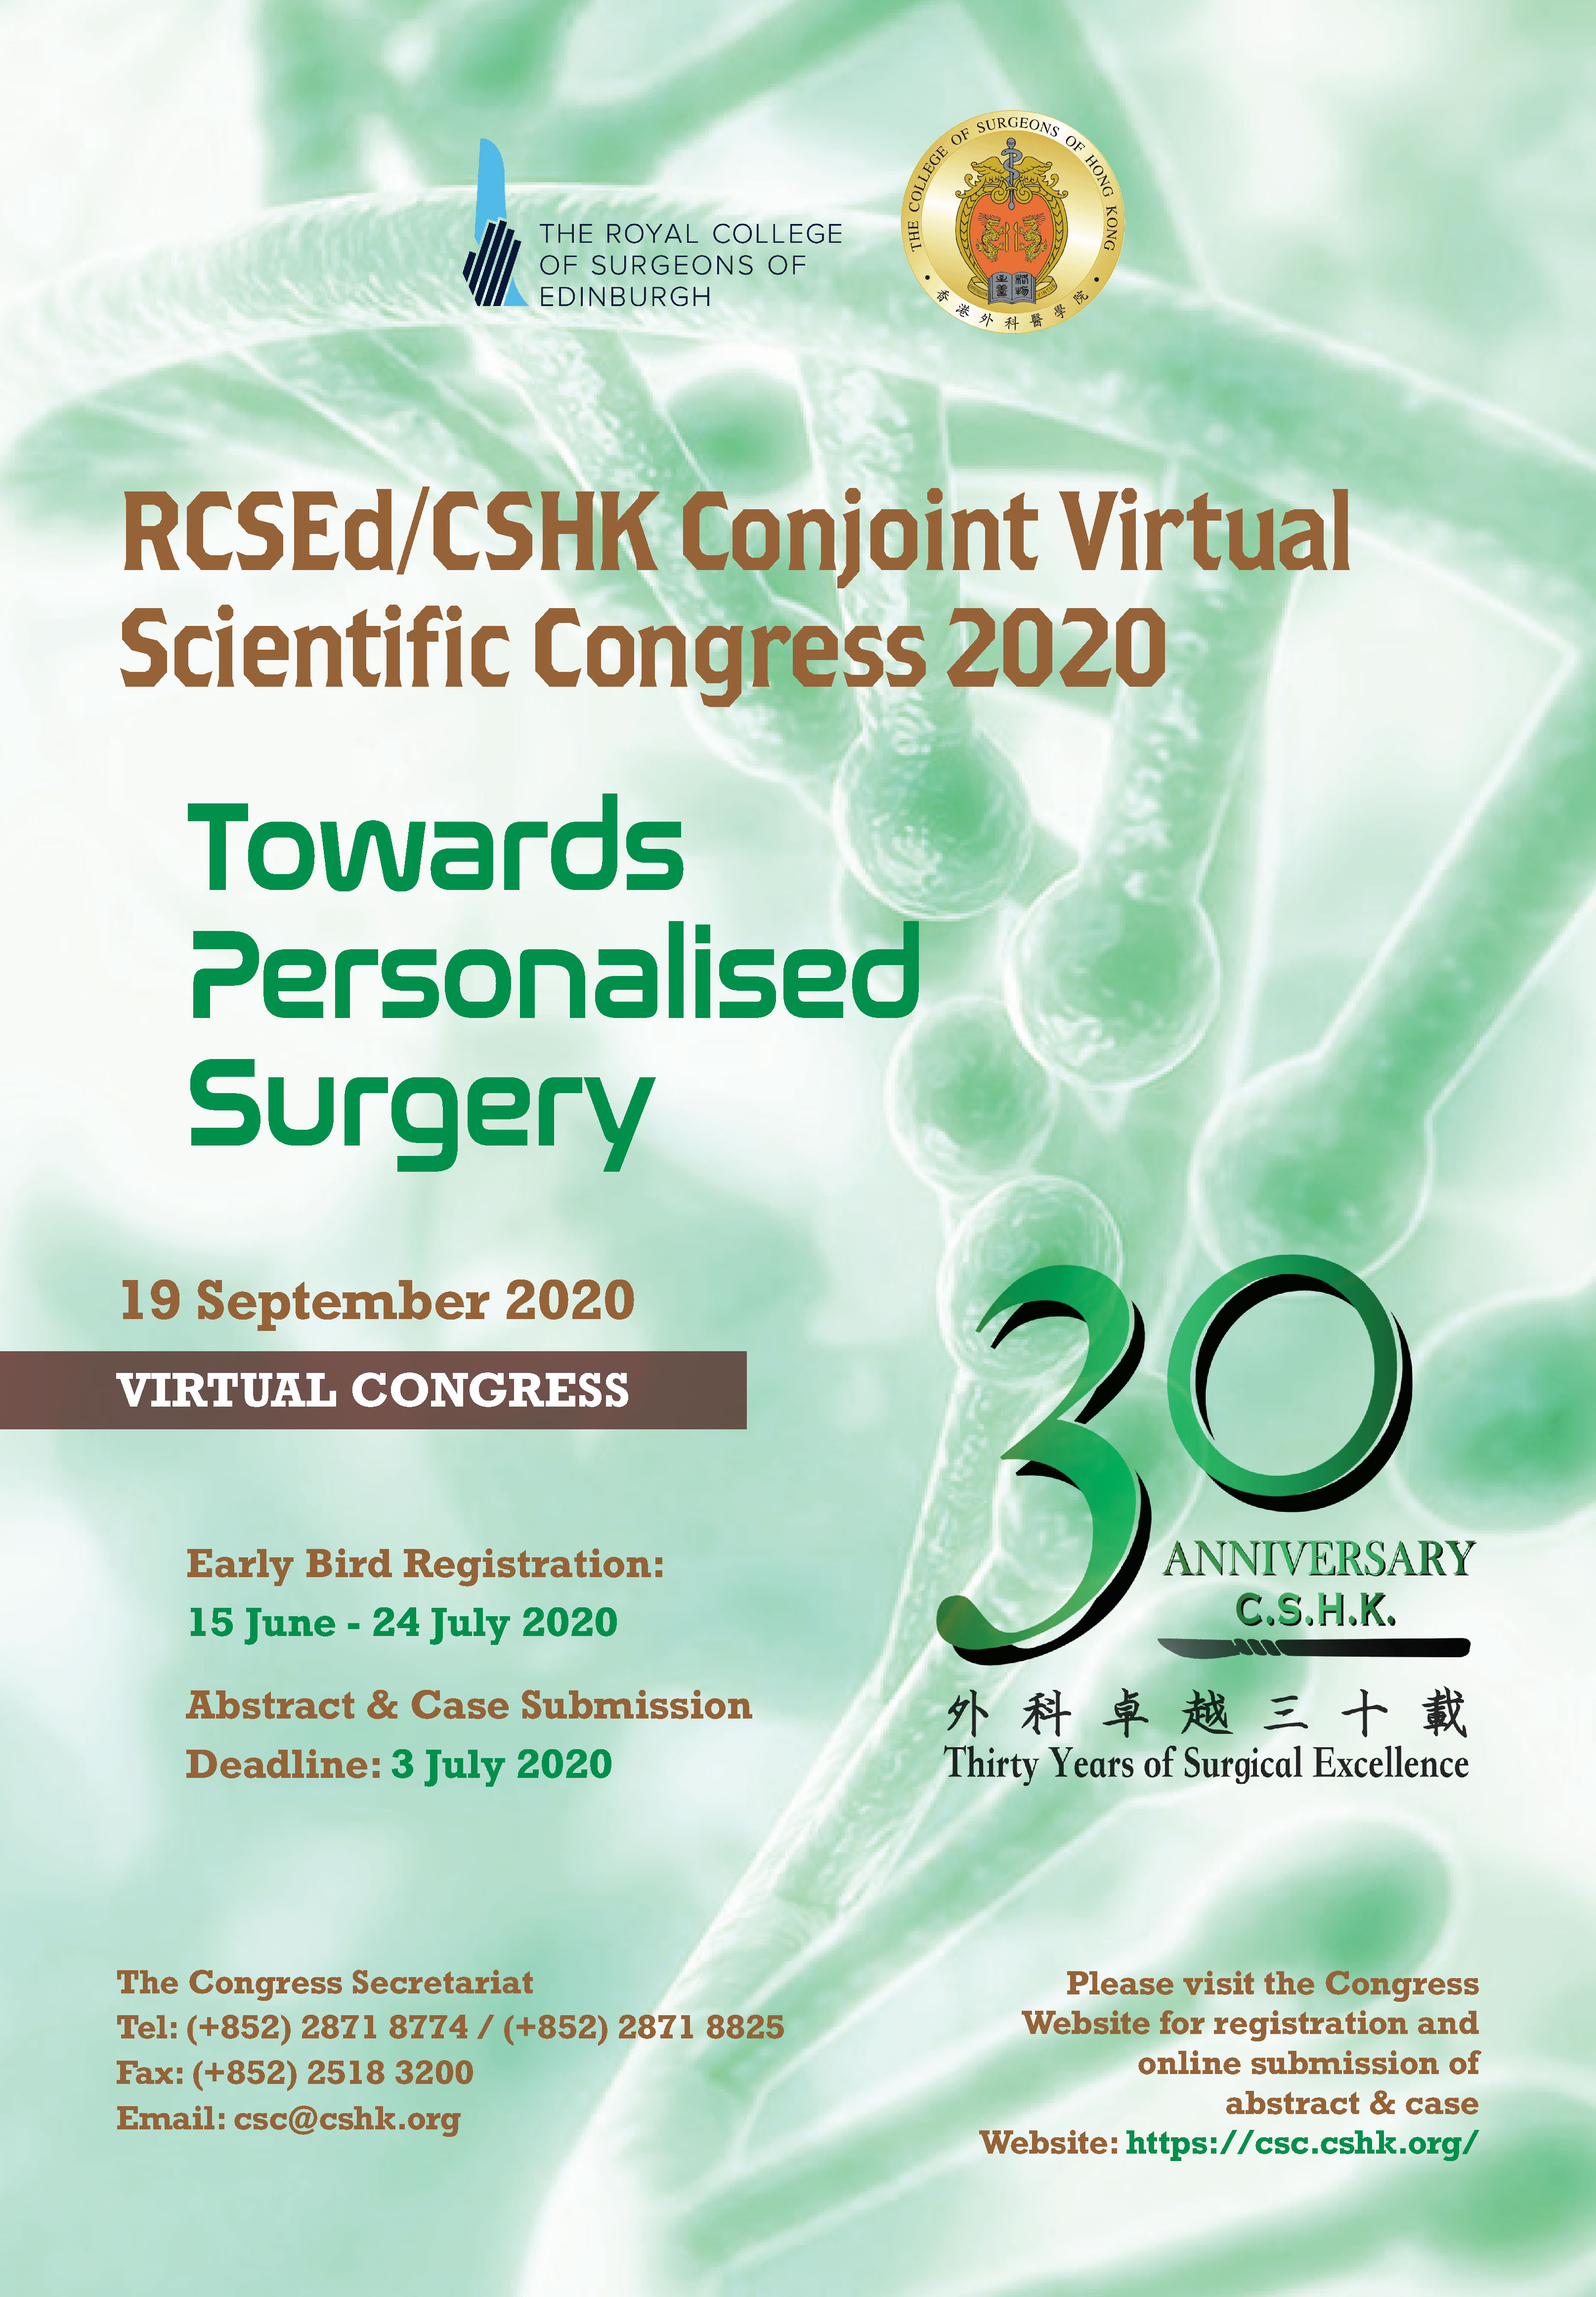 RCSEd/ CSHK Conjoint Virtual Scientific Congress 2020